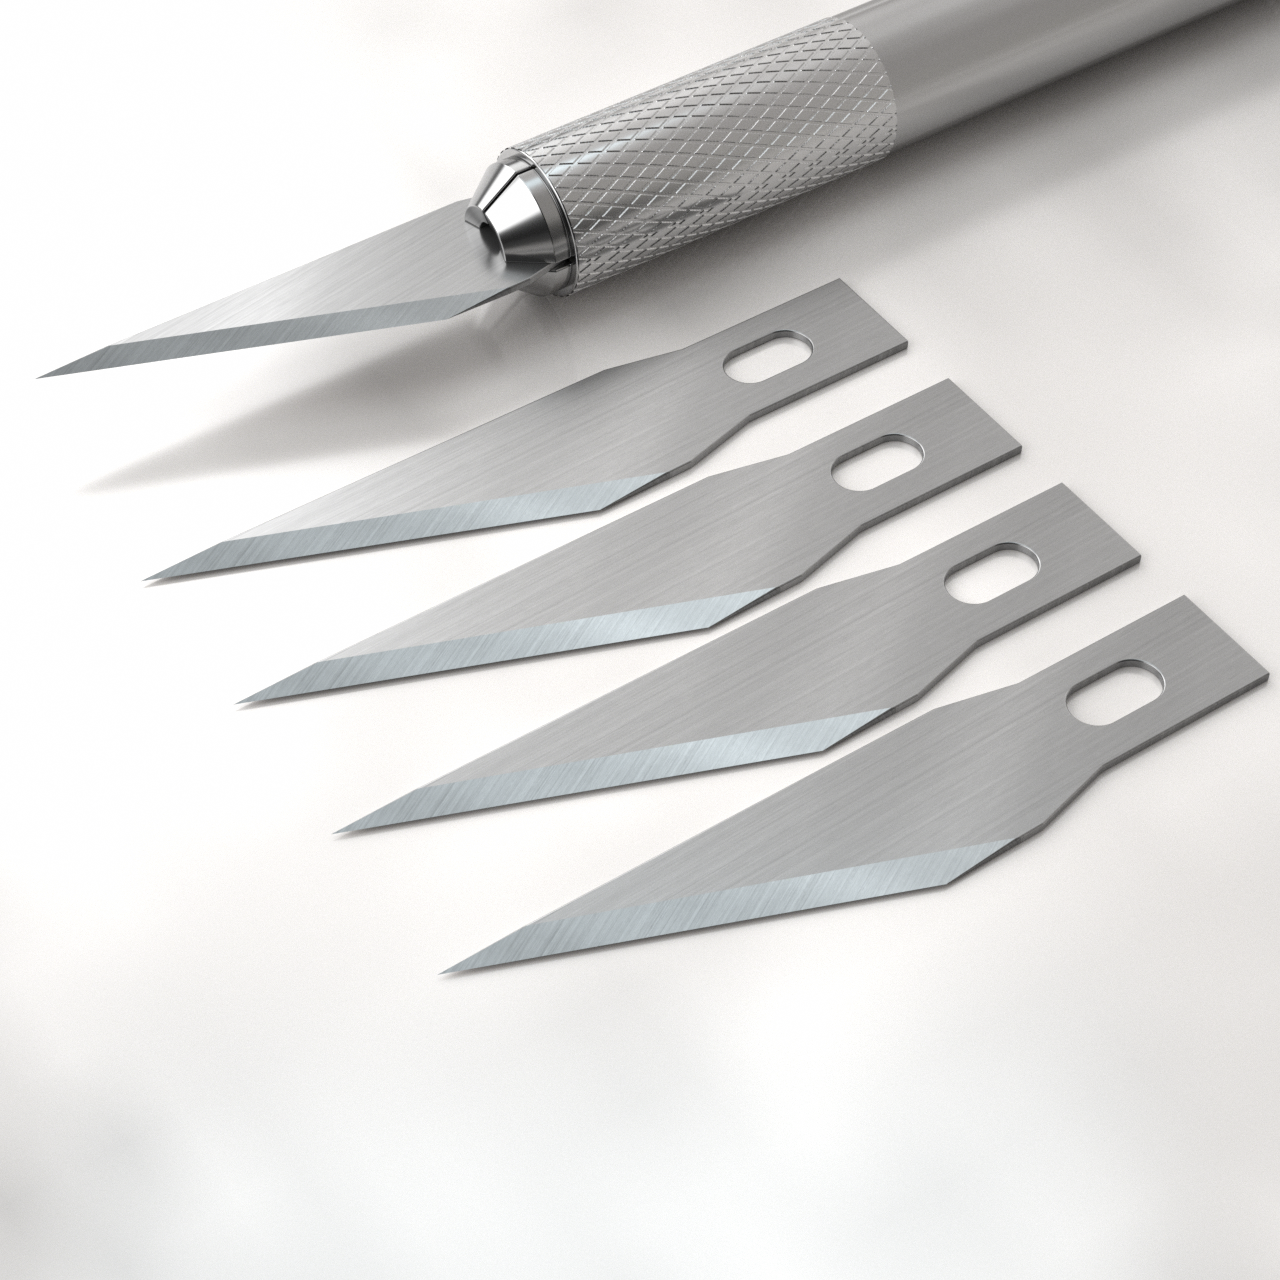 Nicpro 123 PCS Precision Cutter Hobby Knife Set,3 Hobby Exacto